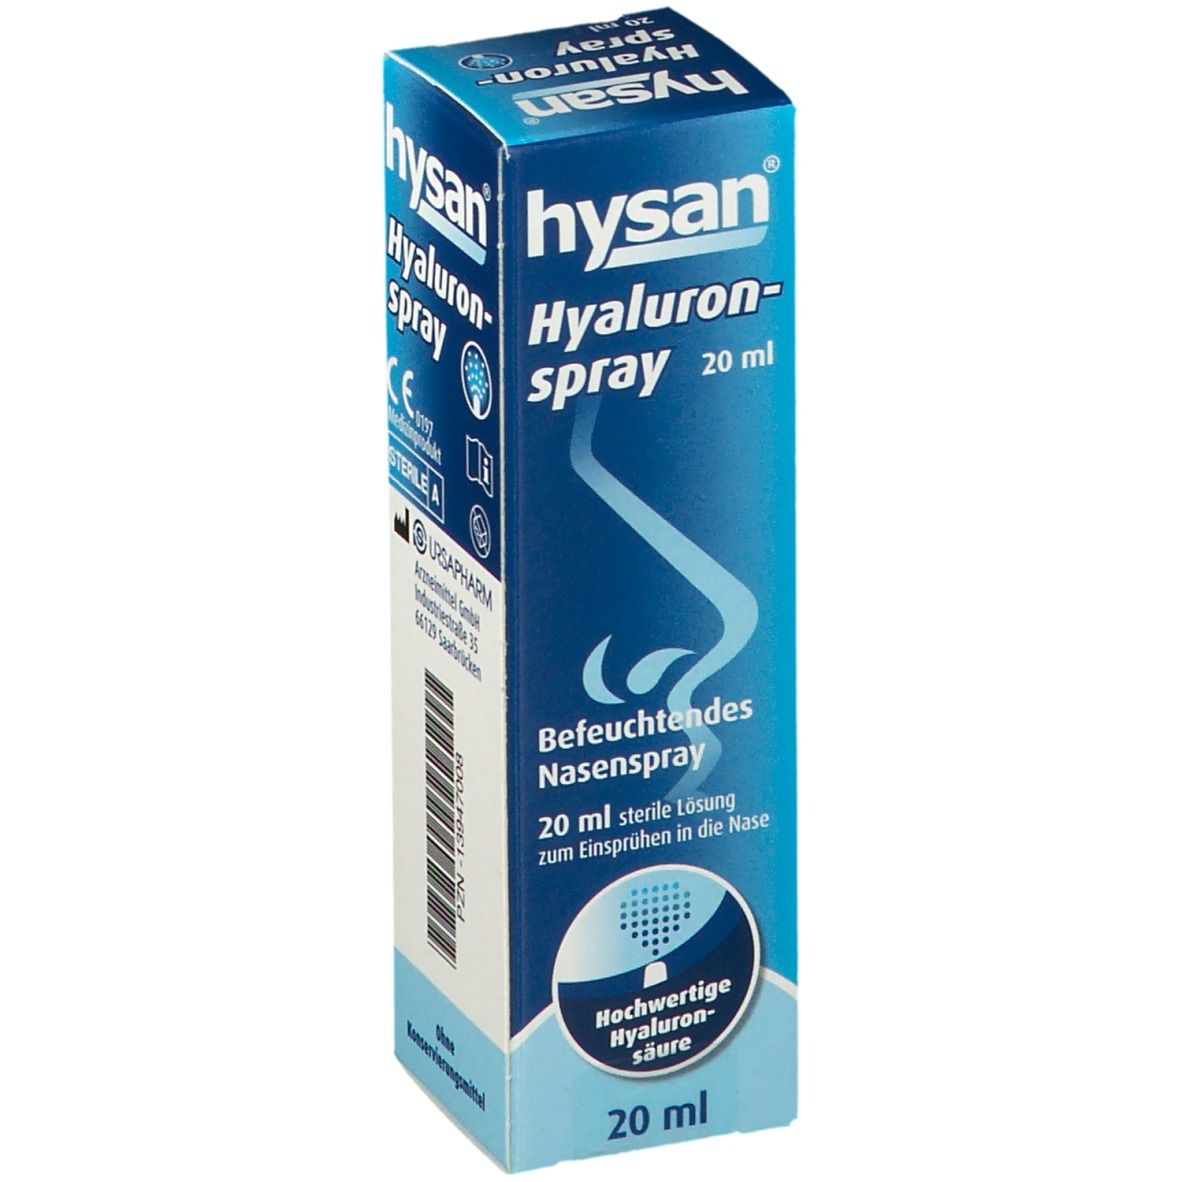 hysan® Hyaluronspray